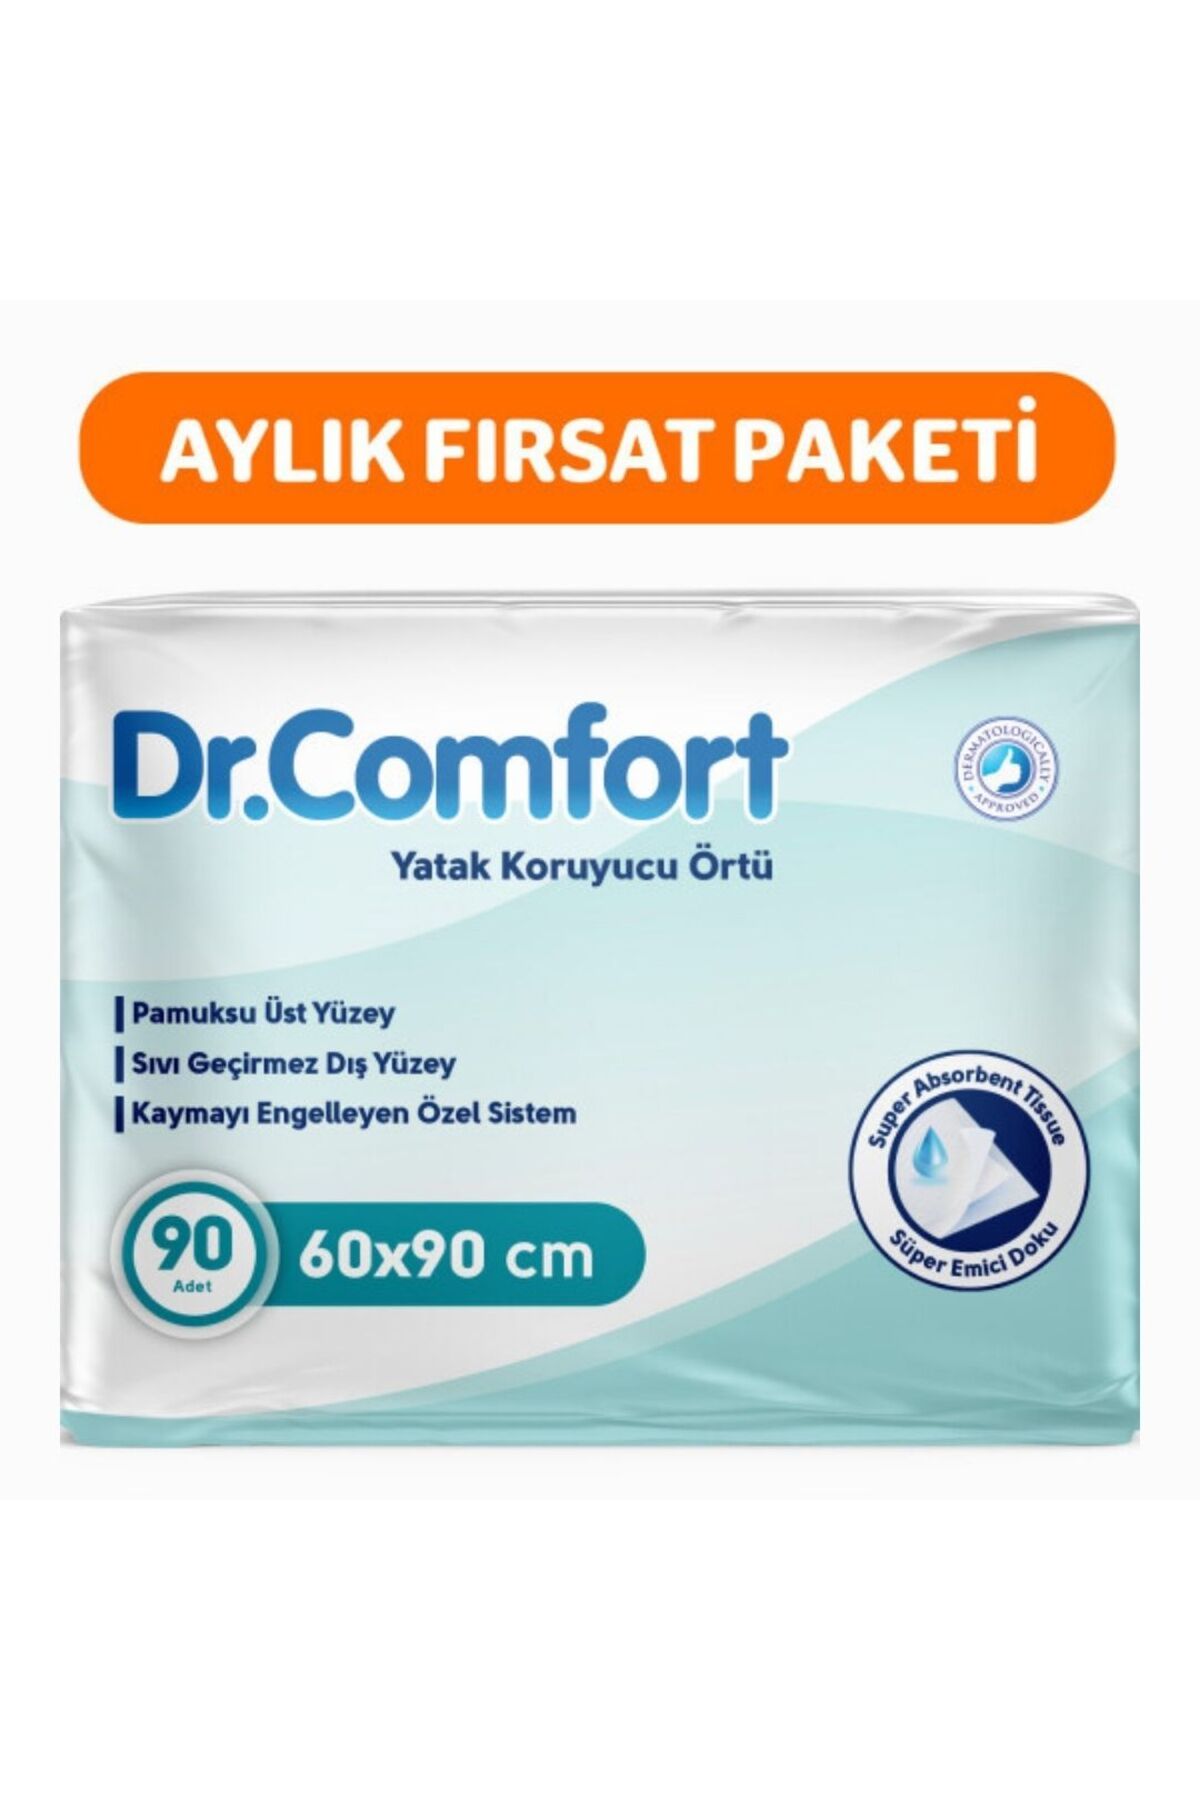 Dr.Comfort Dr Comfort 60x90 Yatak Koruyucu Örtü 90 Adet